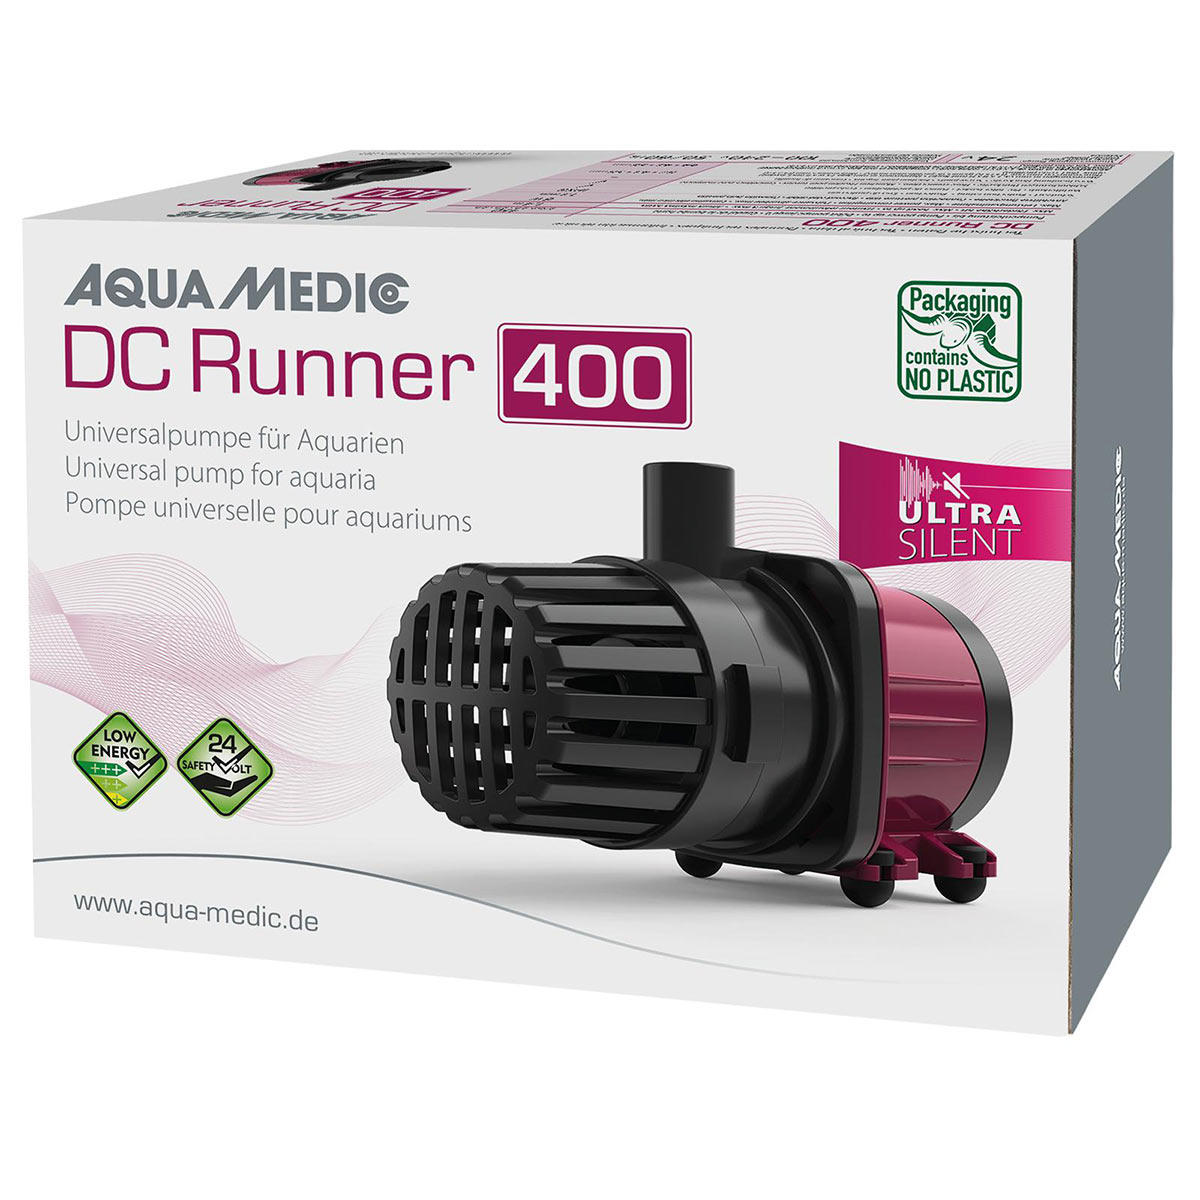 Aqua Medic Aquariumpumpe DC Runner 400 | Gebrauchtware